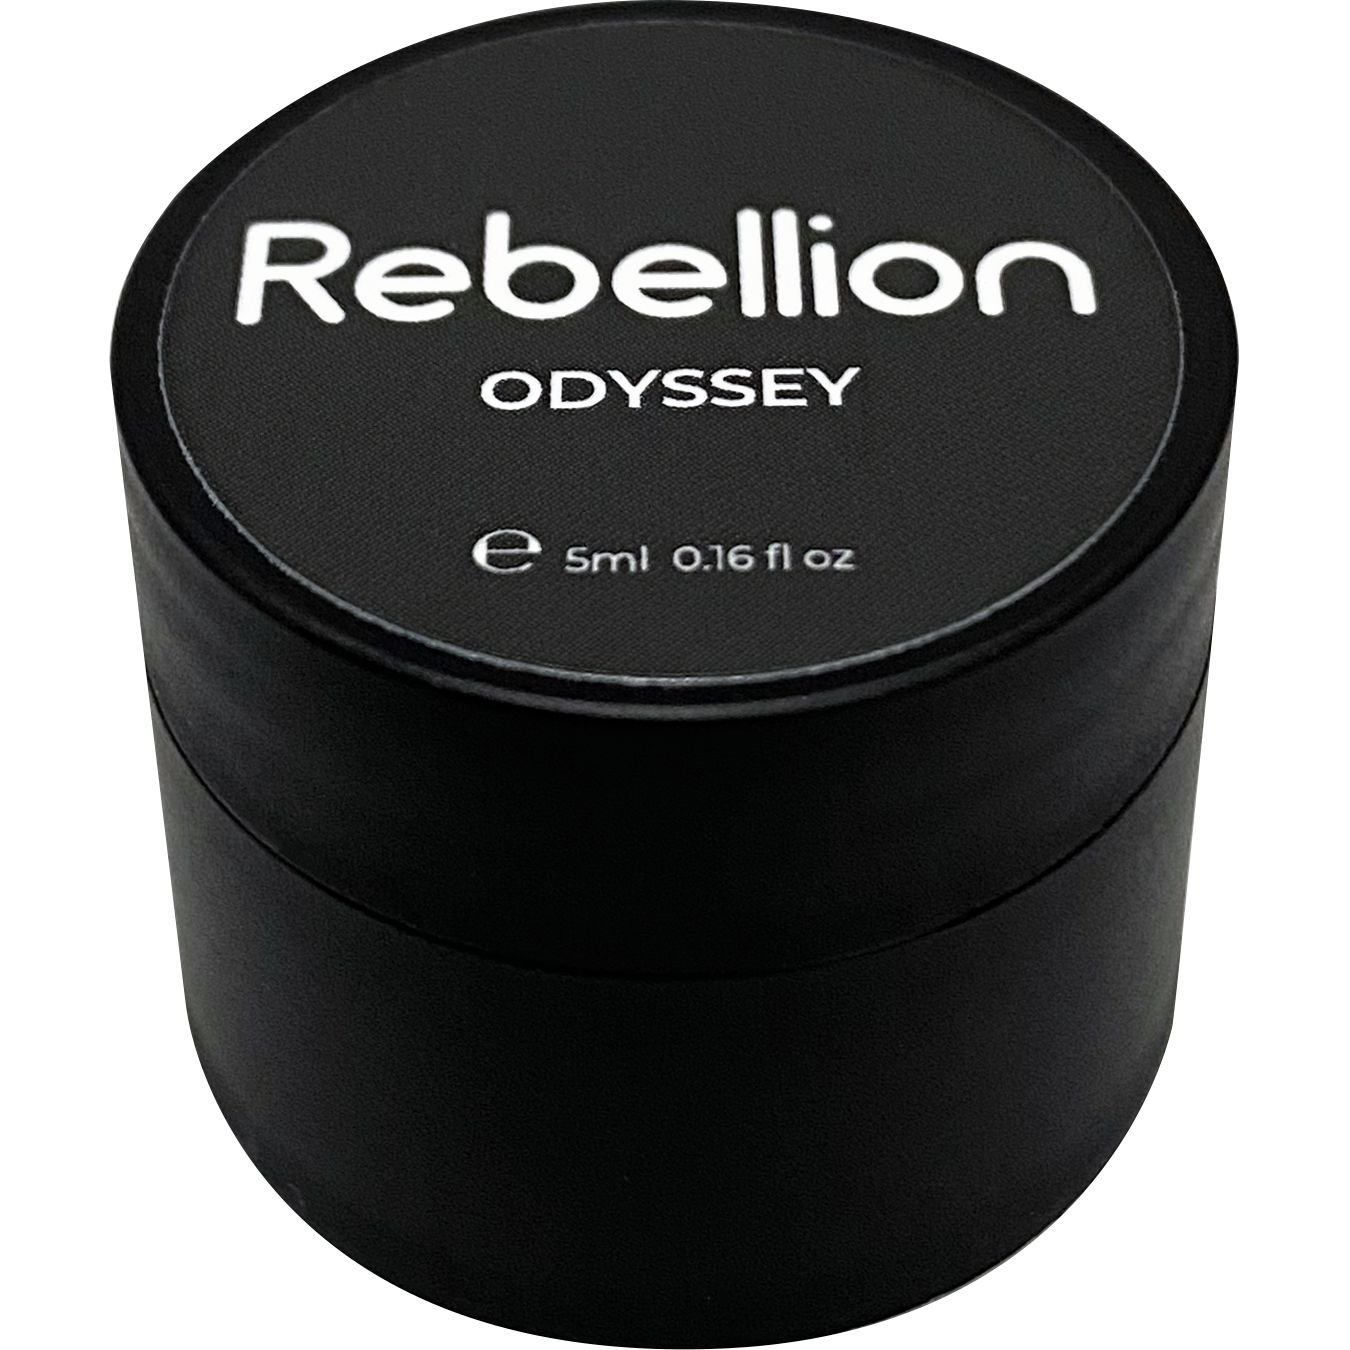 Твердые духи Rebellion Odyssey, 5 мл - фото 2